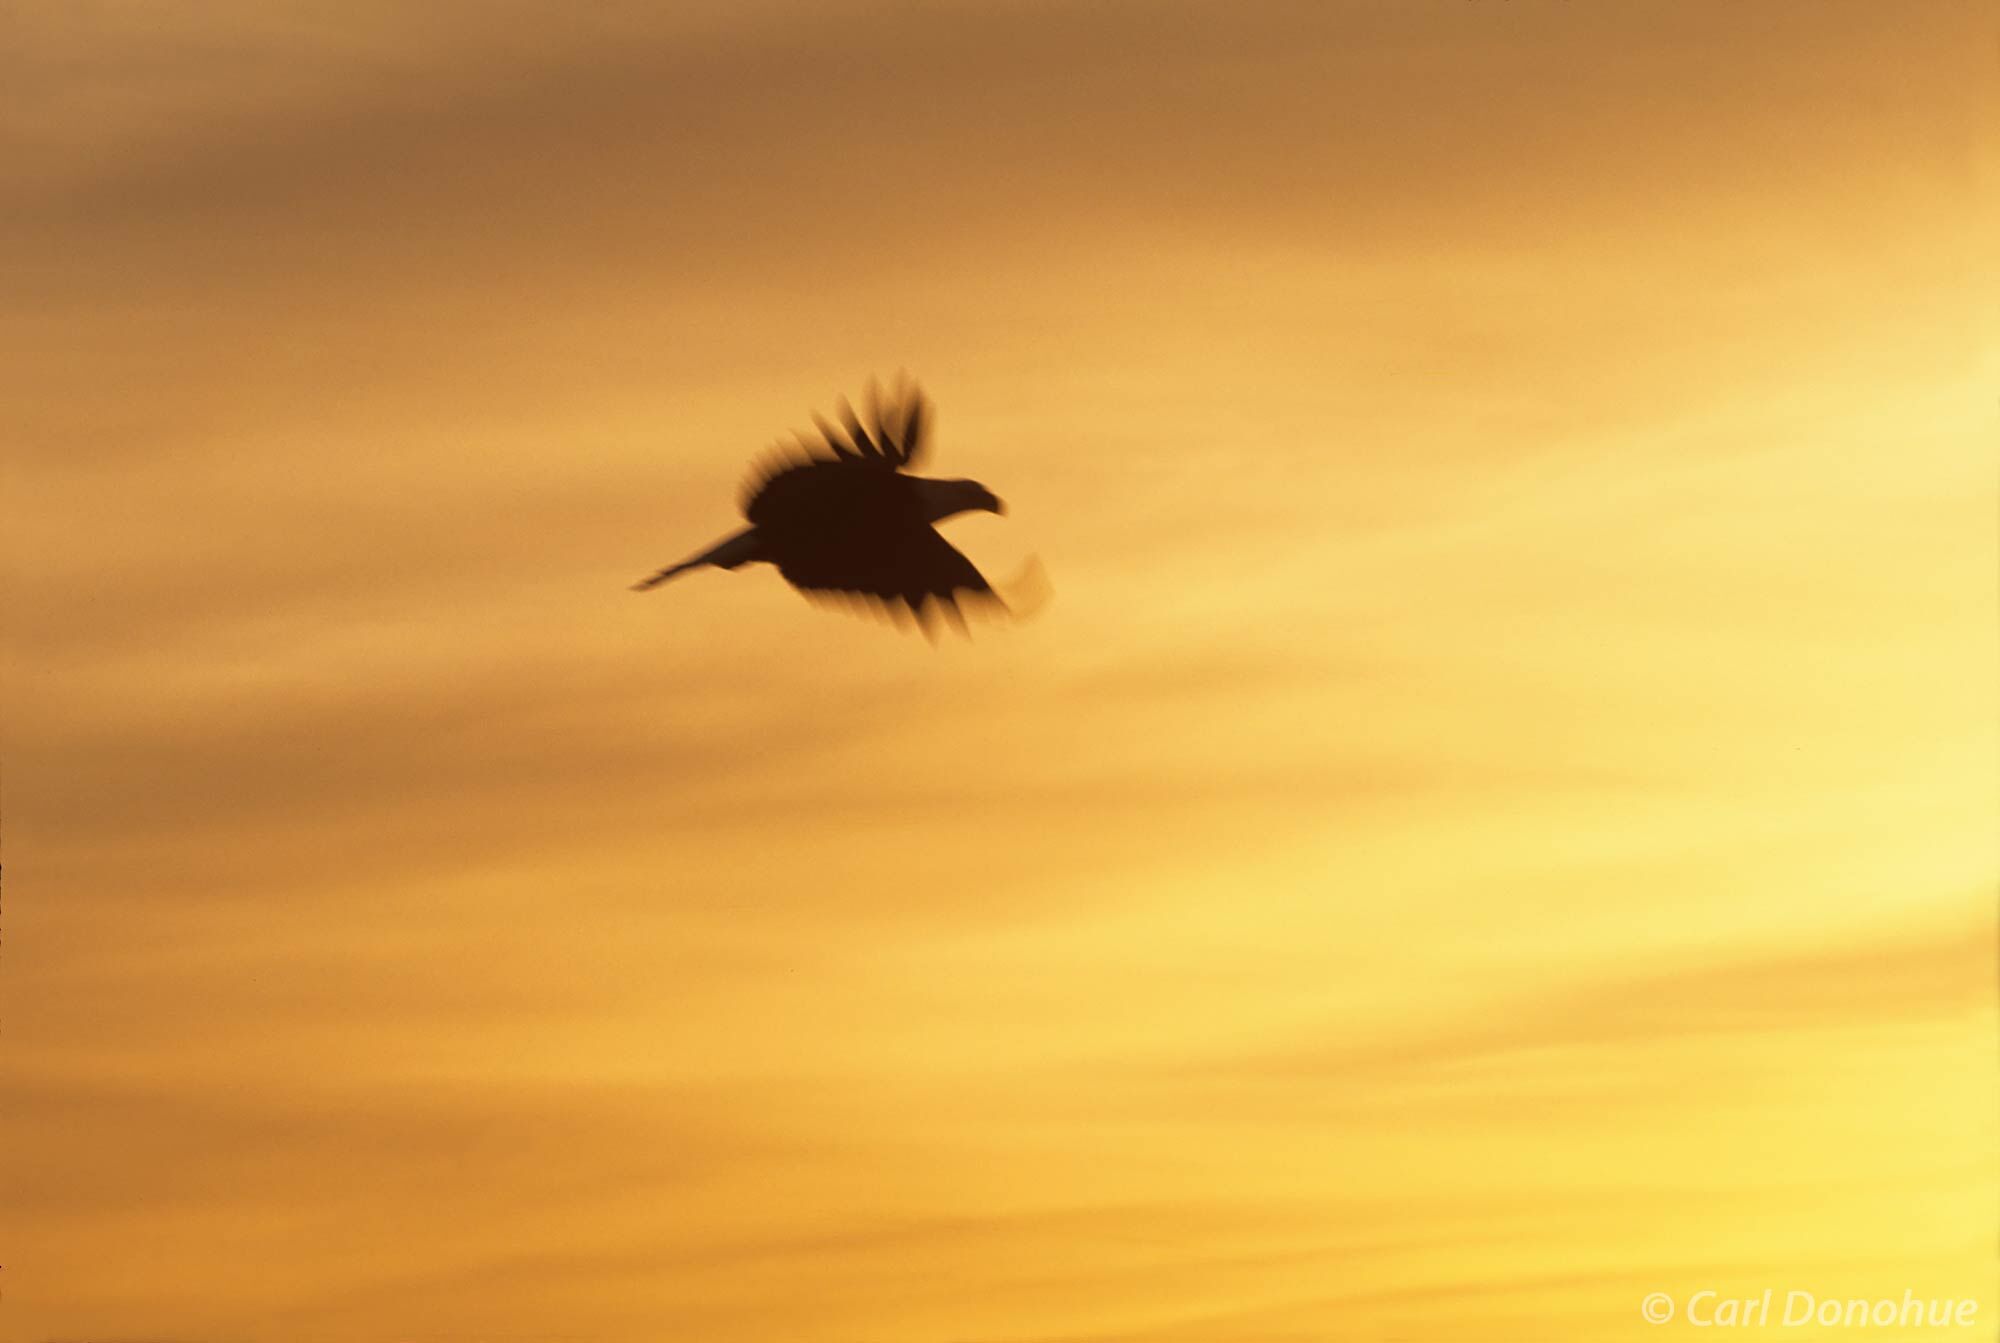 A bald in flight, soaring silhouette photo against a colorful sunset sky near Homer, Alaska.  Bald eagle fishing in Kachemak...